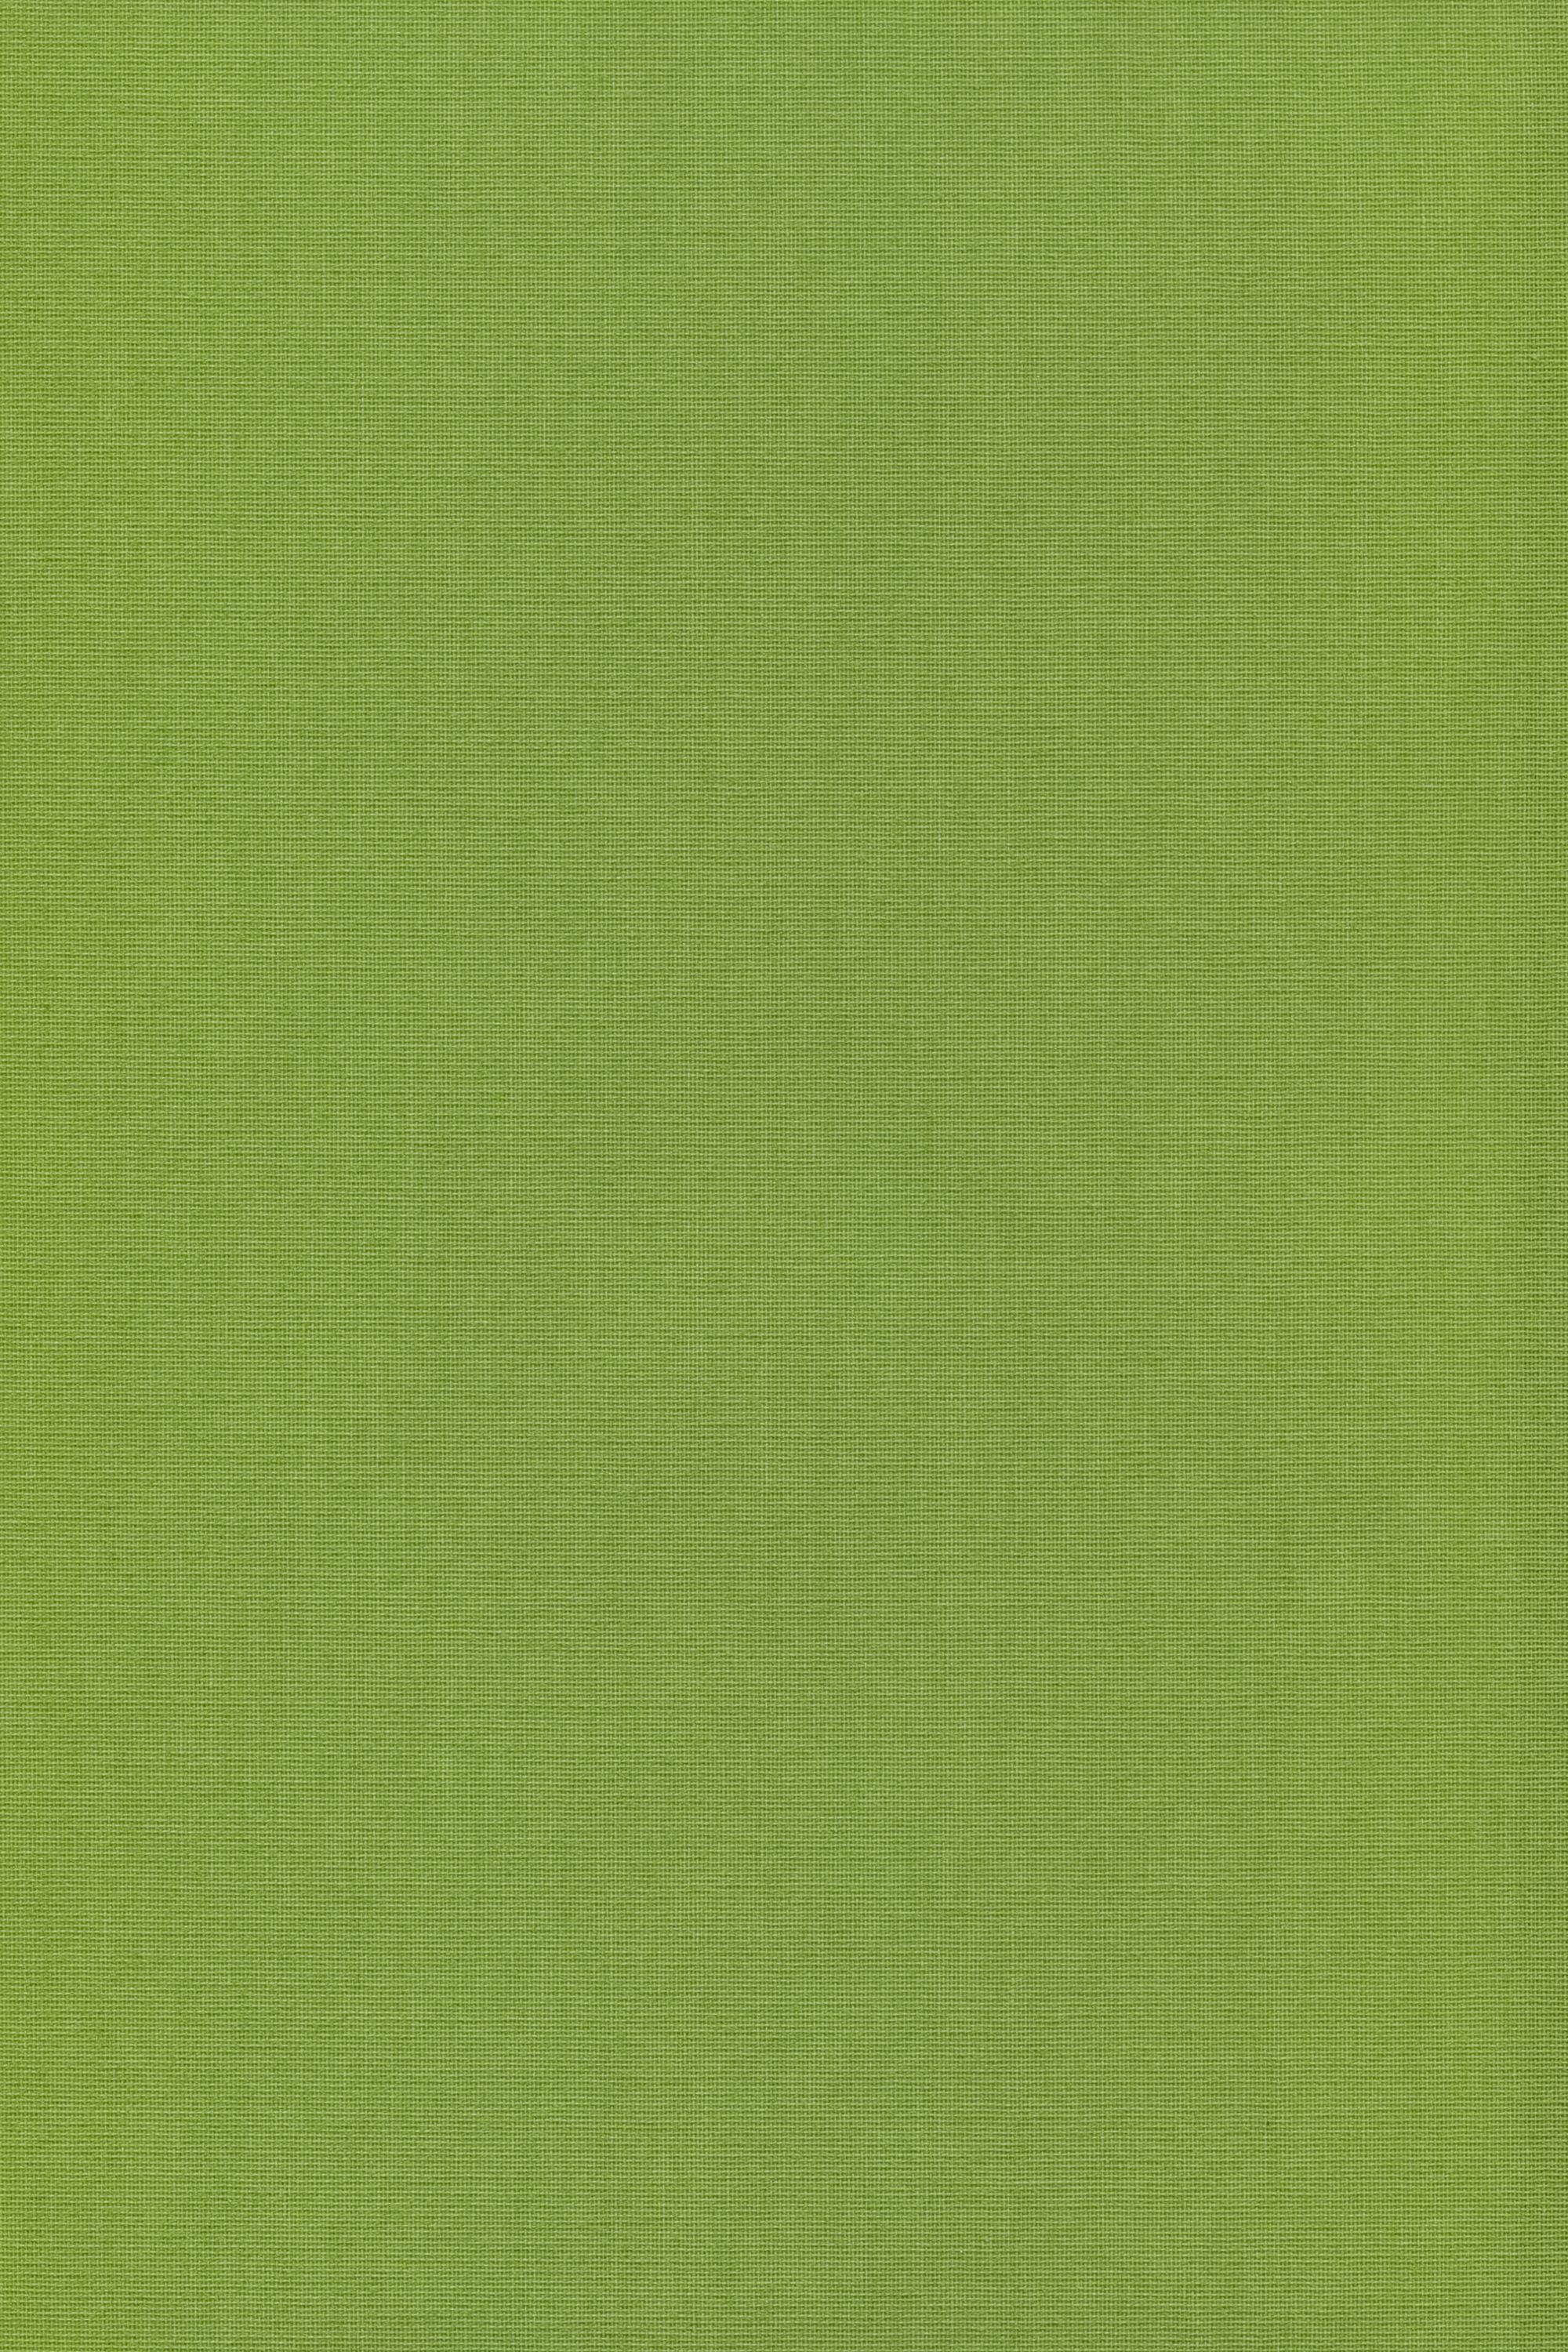 Apfelgrün, HxB 175x102.5cm LYSEL®, blickdicht, Rollo Basisrollo Tageslicht